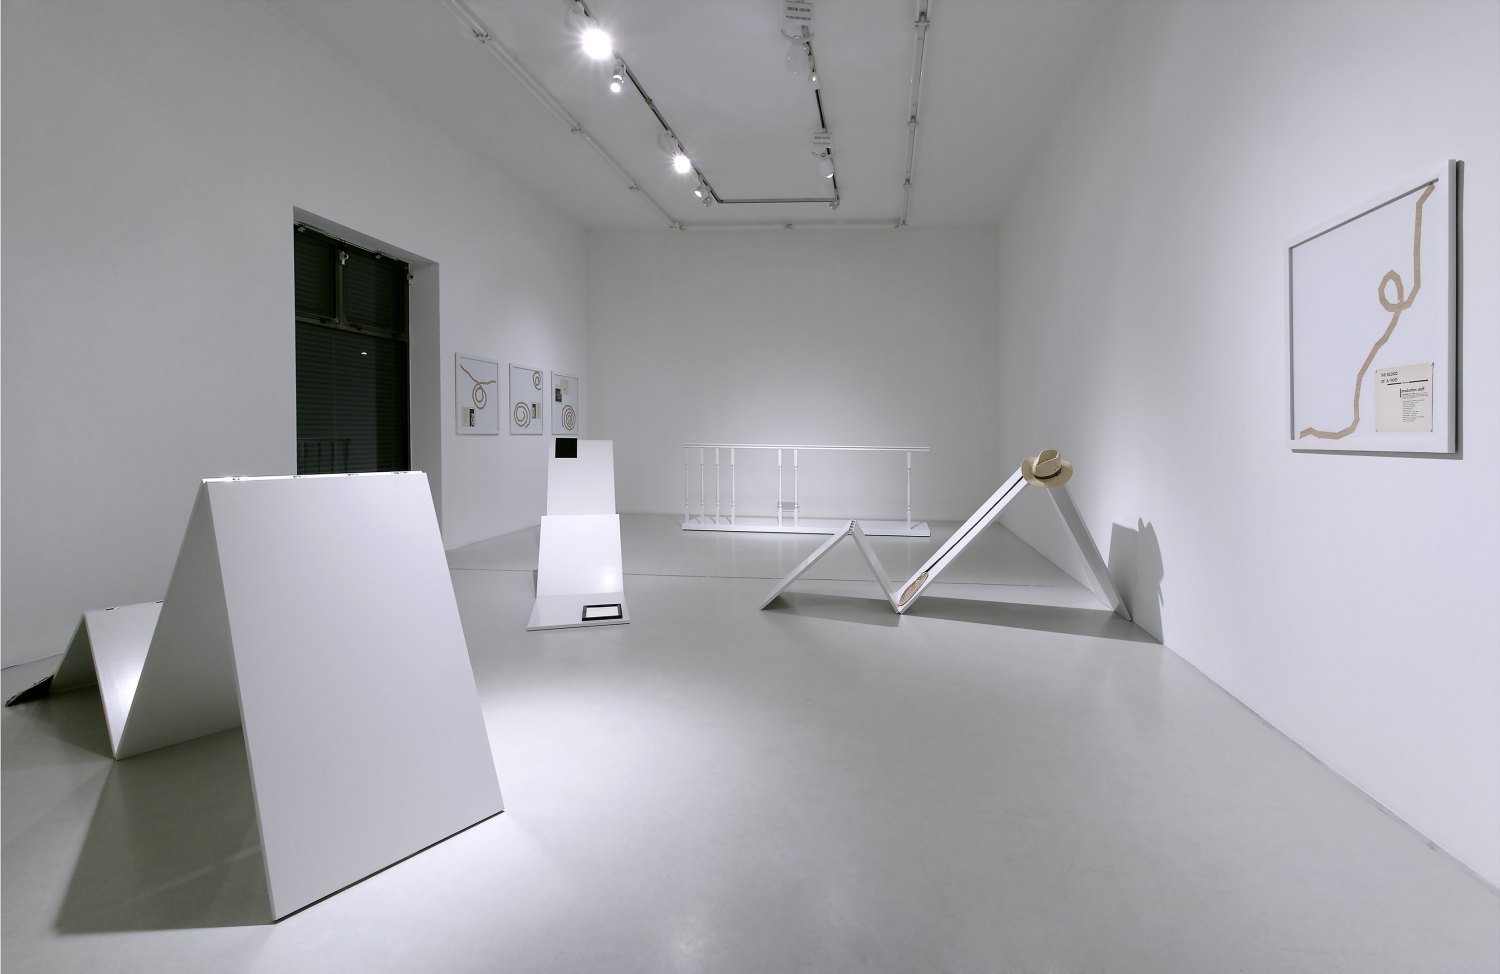 Tom Burr Complete Break Down Installation view, Galerie Neu, Berlin, 2005